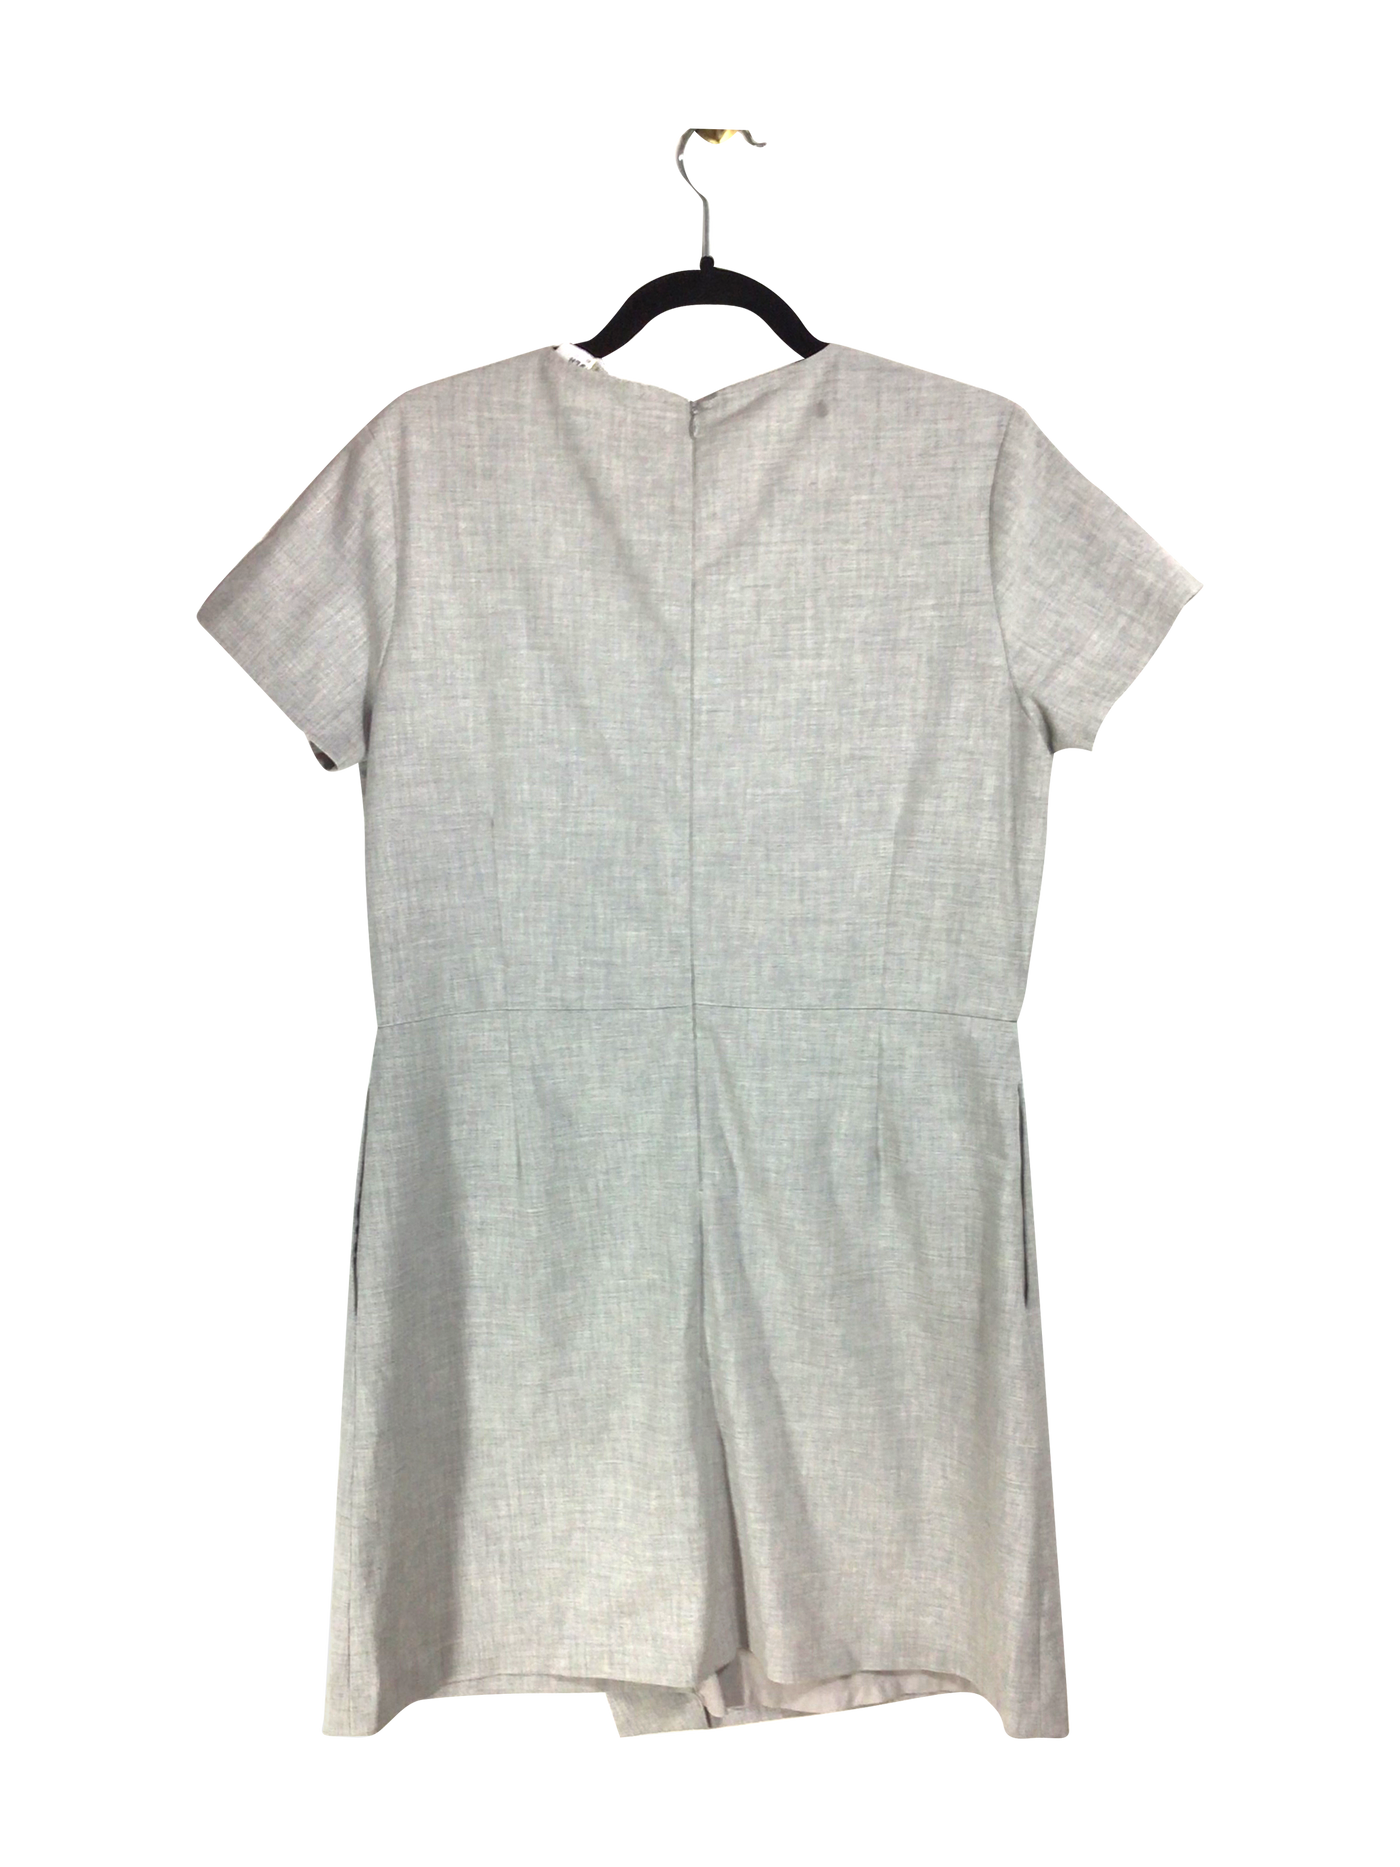 OF / MERCER Women Shift Dresses Regular fit in Gray - Size L | 39.99 $ KOOP